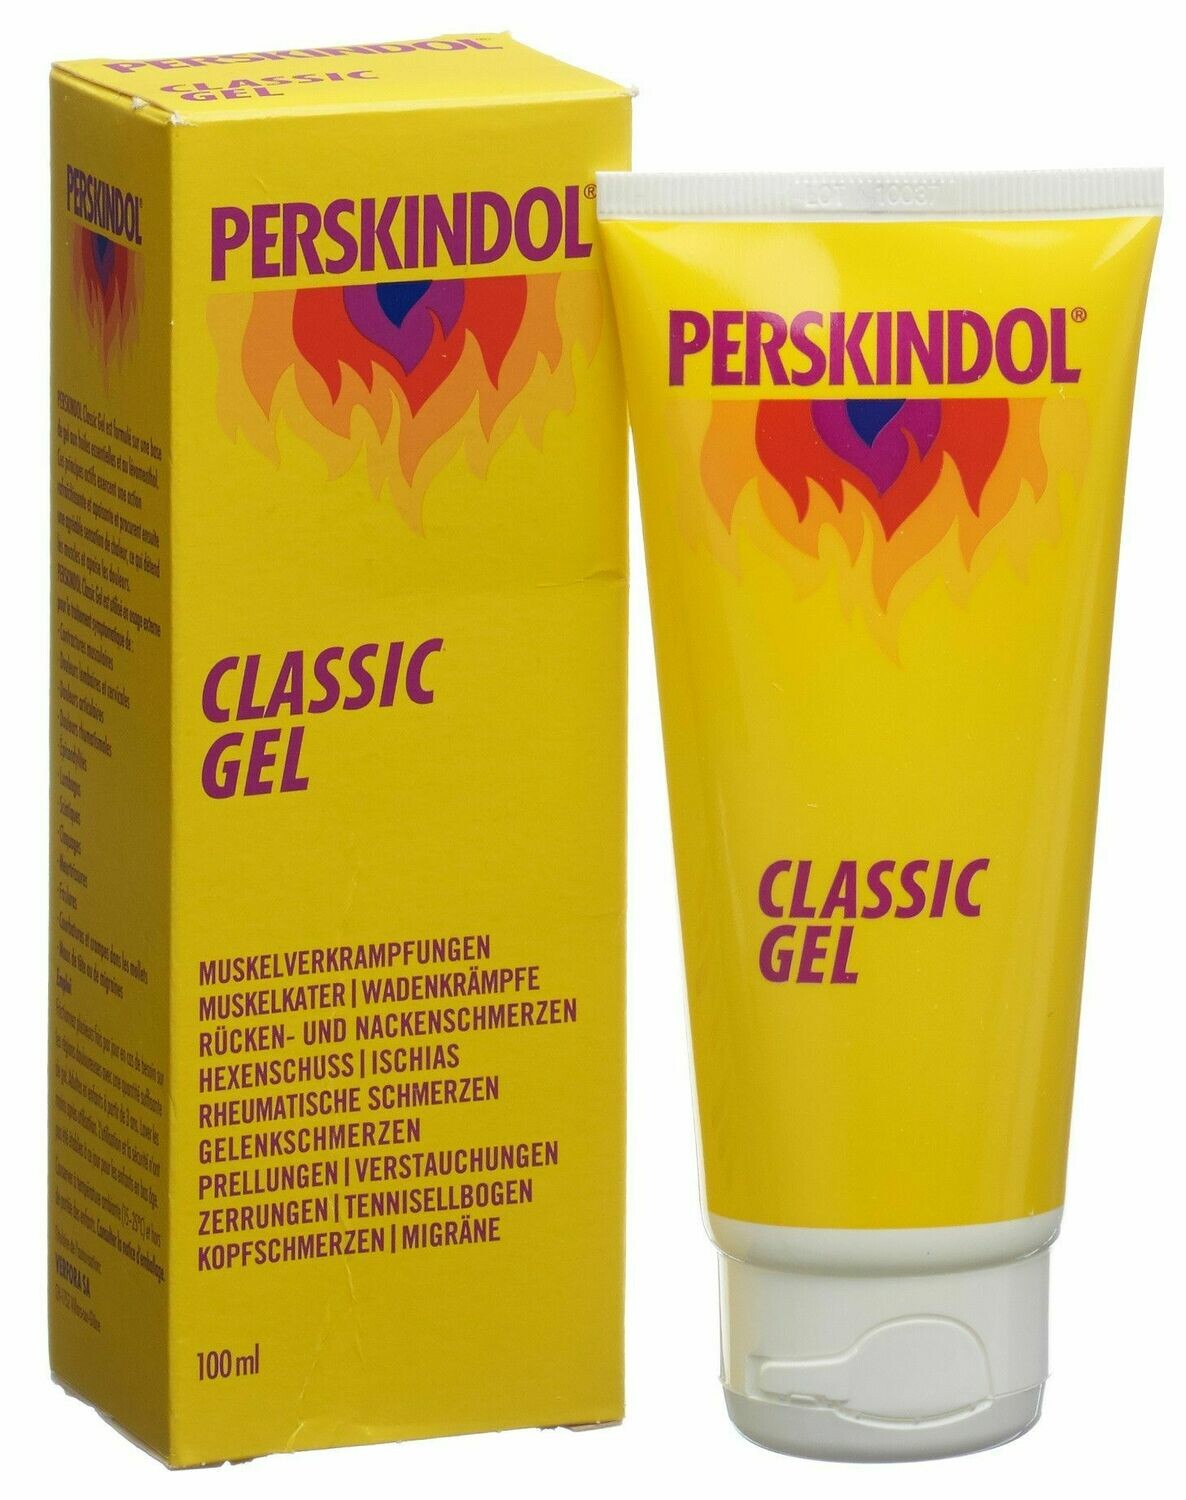 PERSKINDOL Classic gel